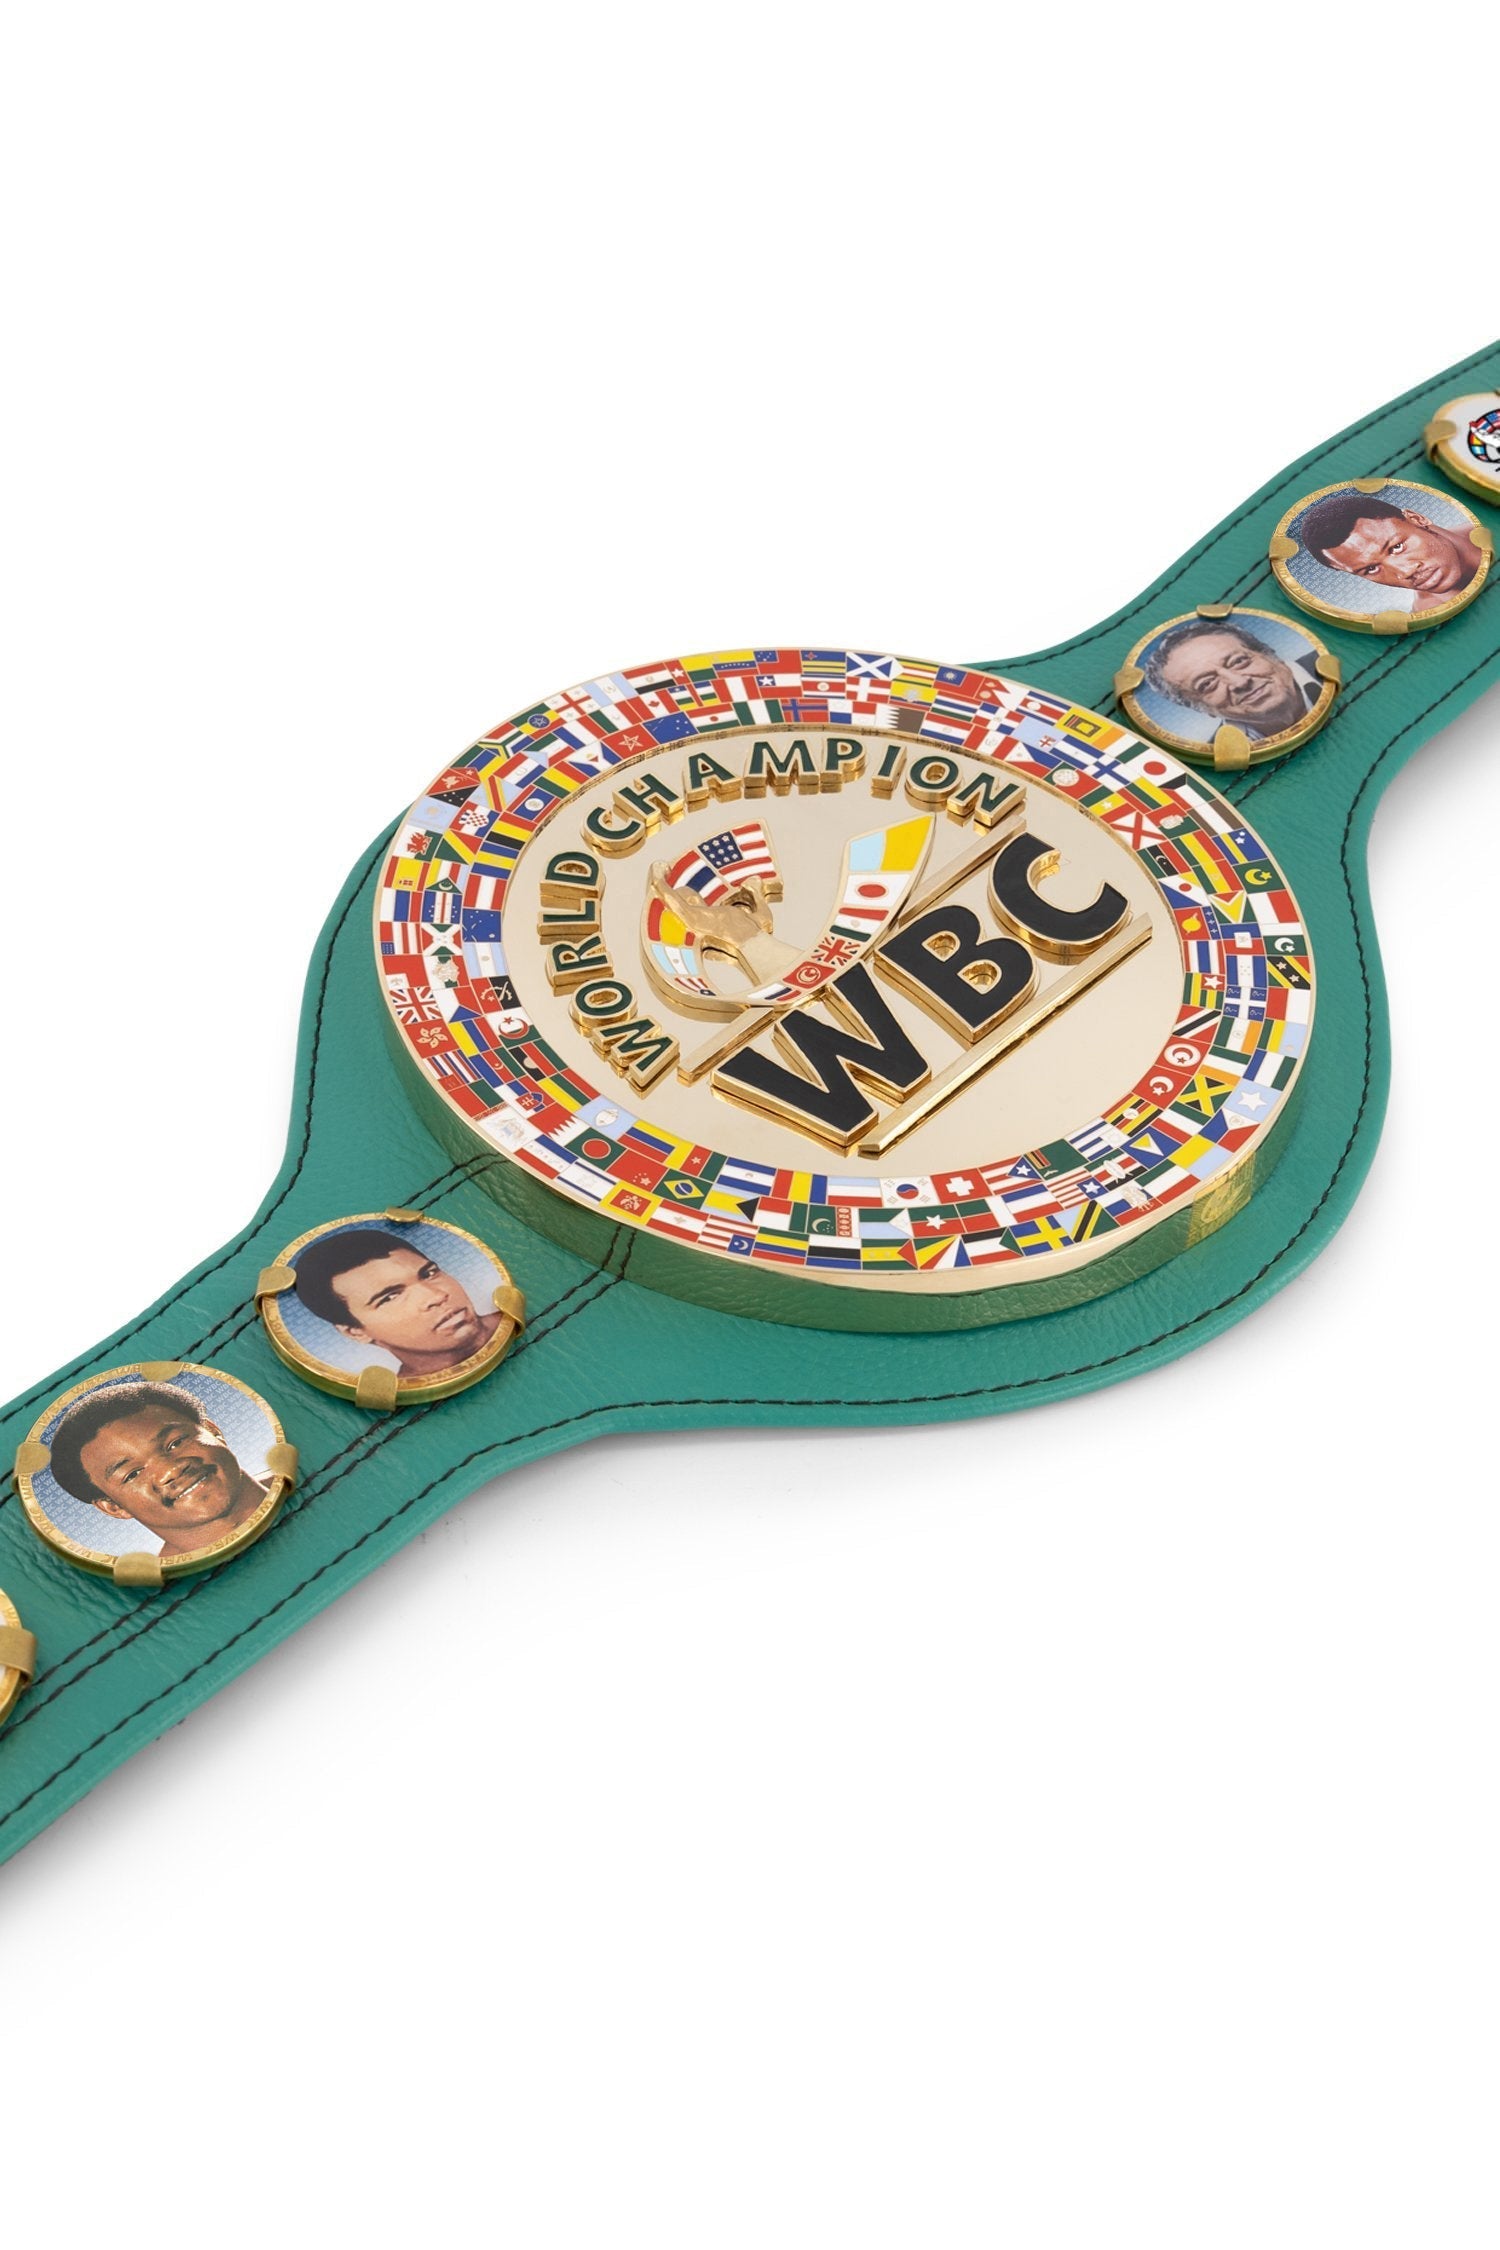 WBC Store Replica Belts WBC Championship Belt  "Historic Fights" George Foreman vs. Joe Frazier